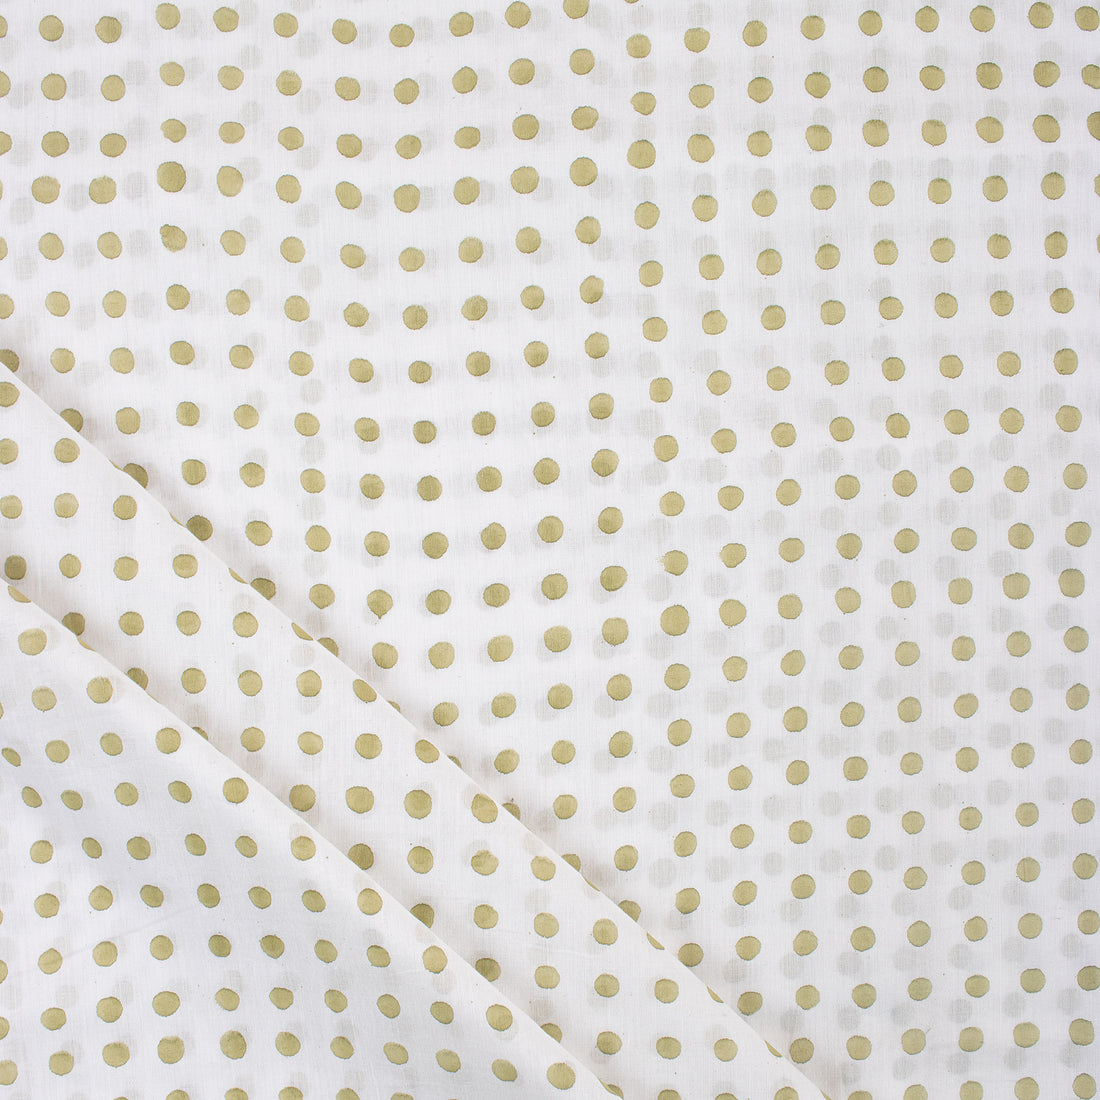 Block Polka Dots Printed Pure Cotton Fabric Material